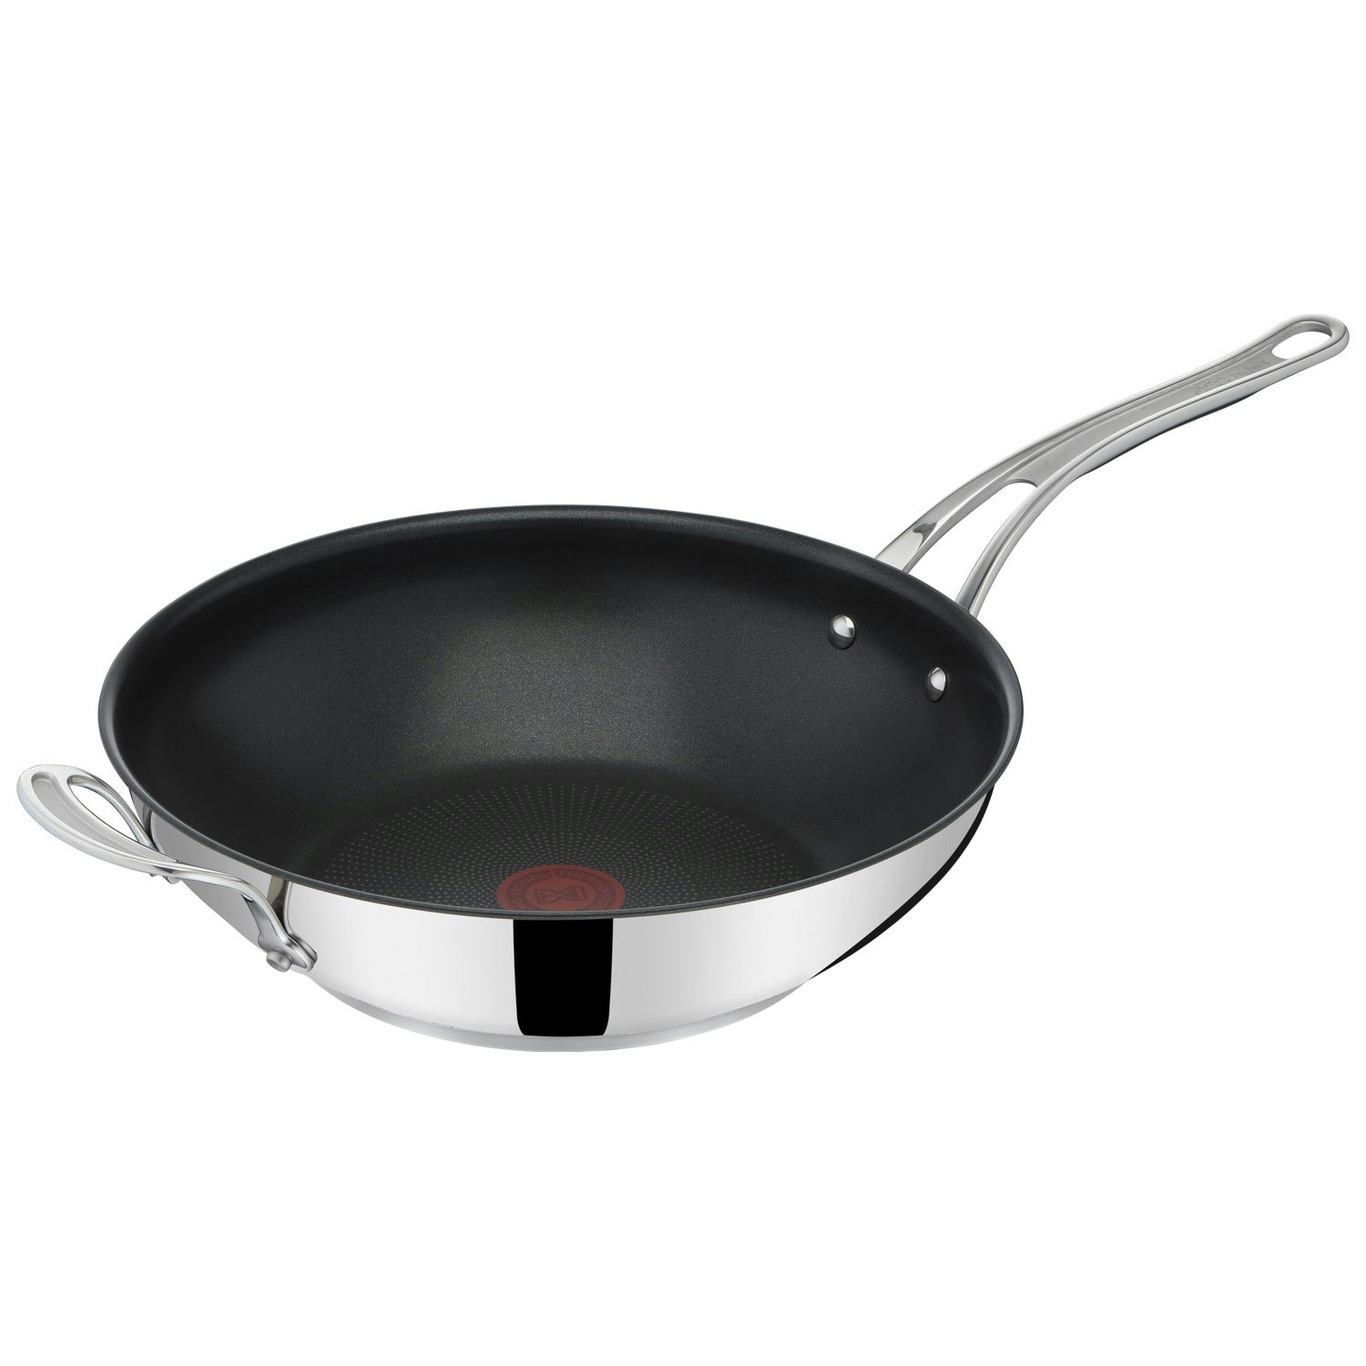 Ananiver Neerduwen Chinese kool Jamie Oliver Cook's Classic Wok Pan, 30 cm - Tefal @ RoyalDesign